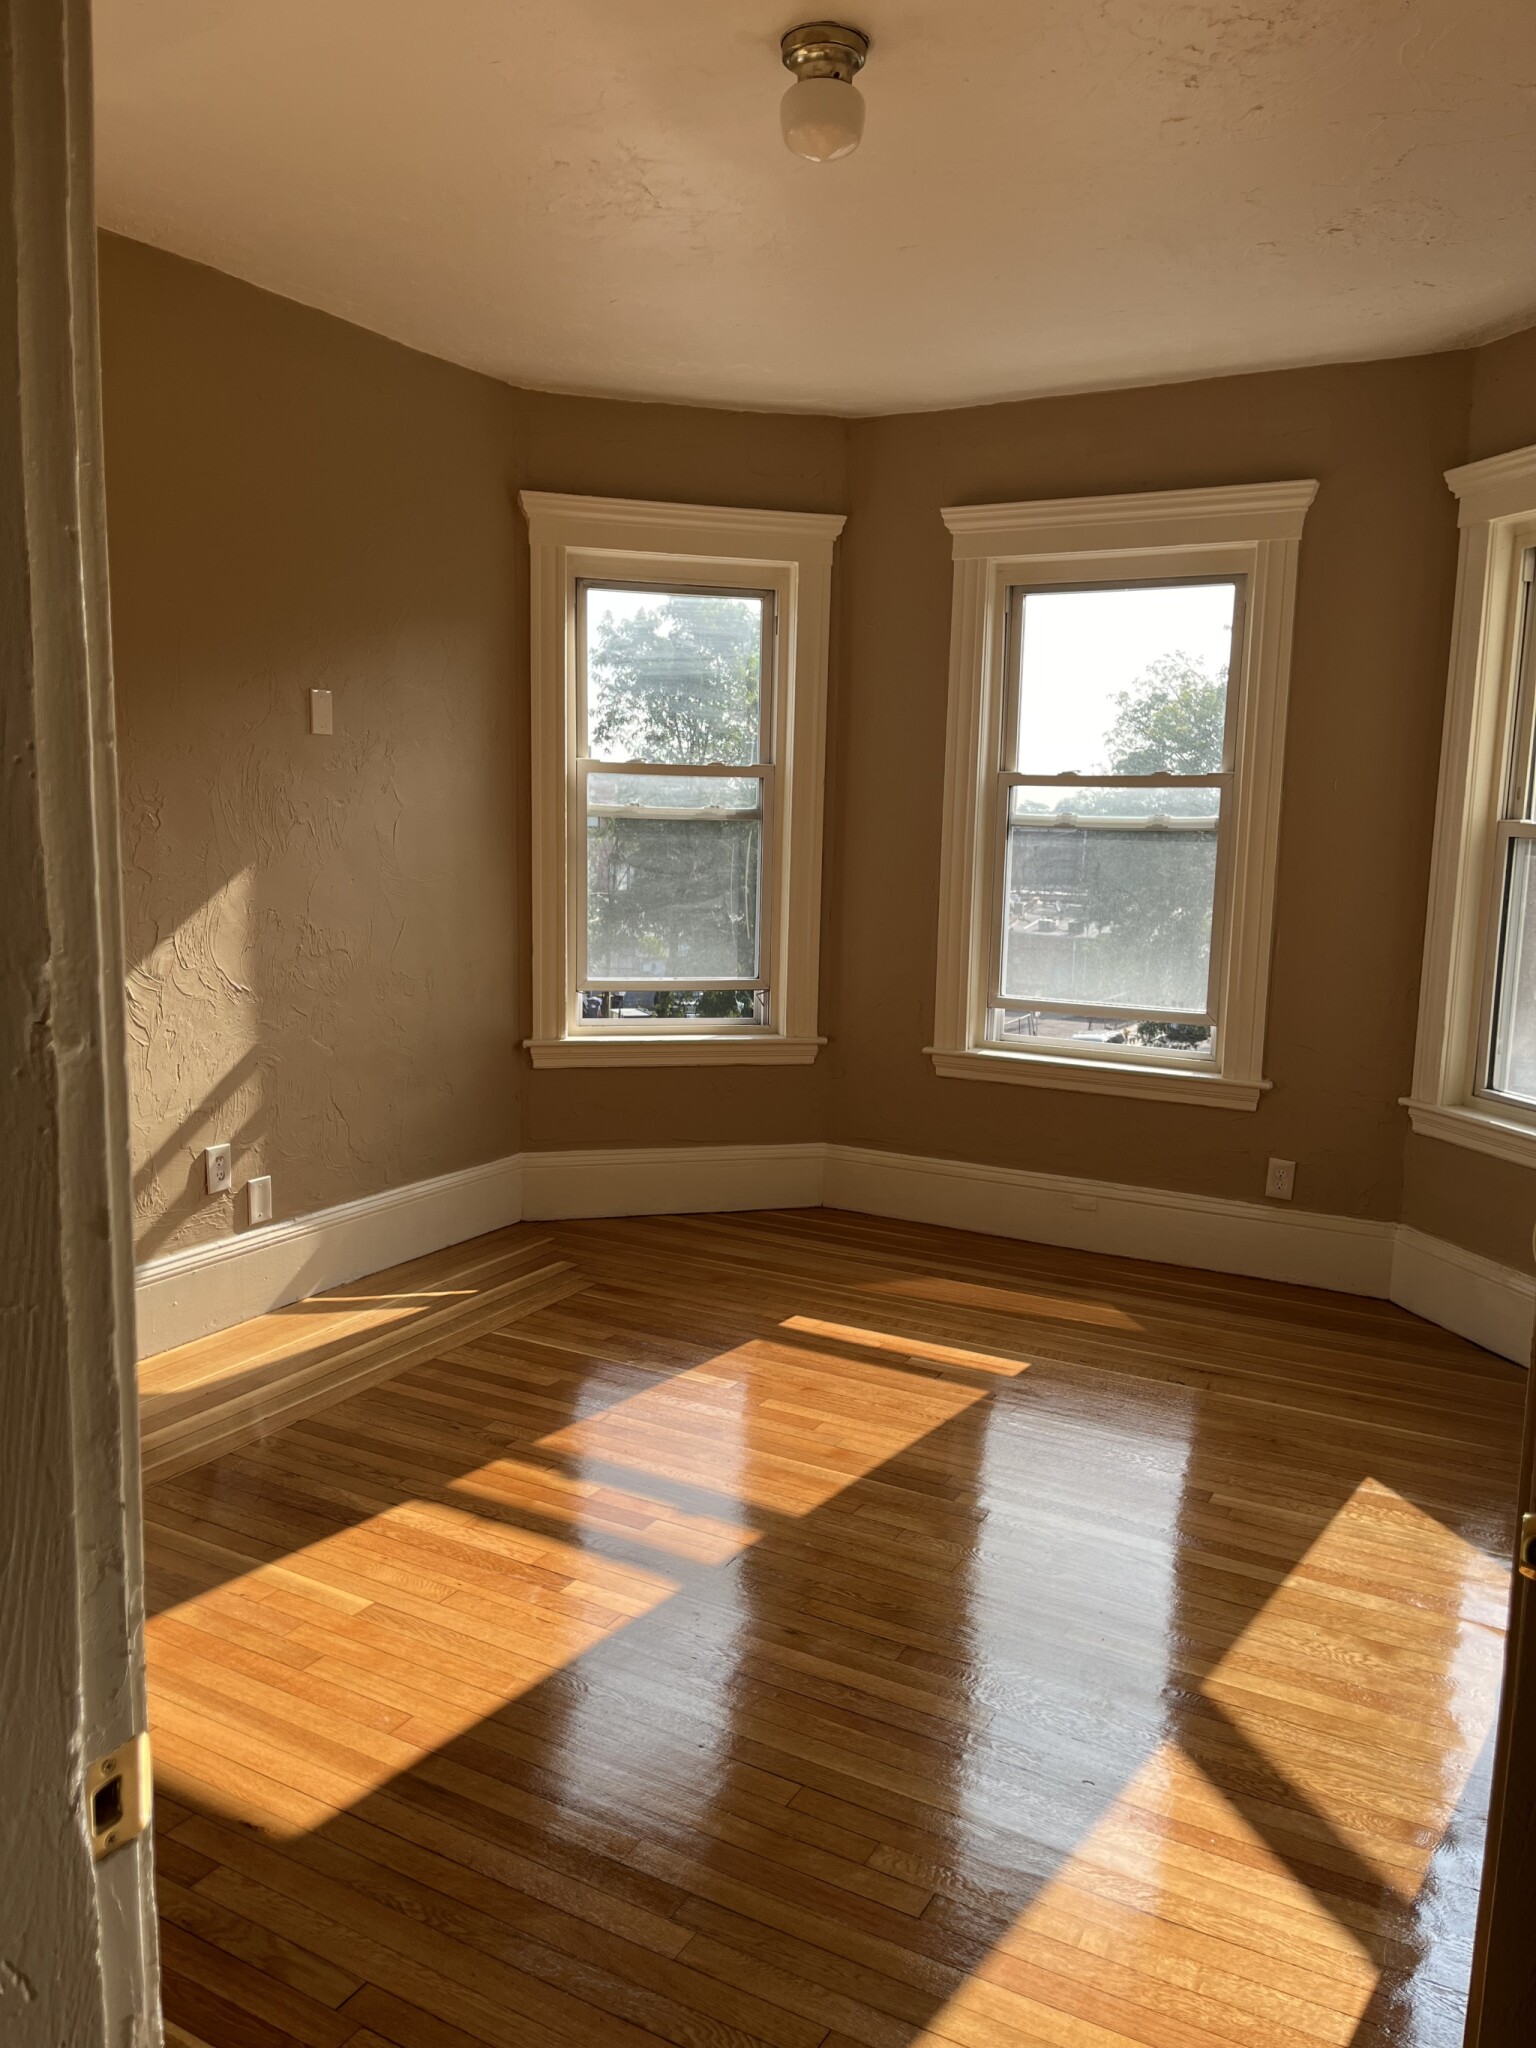 Photos of apartment on Hollander St.,Boston MA 02121